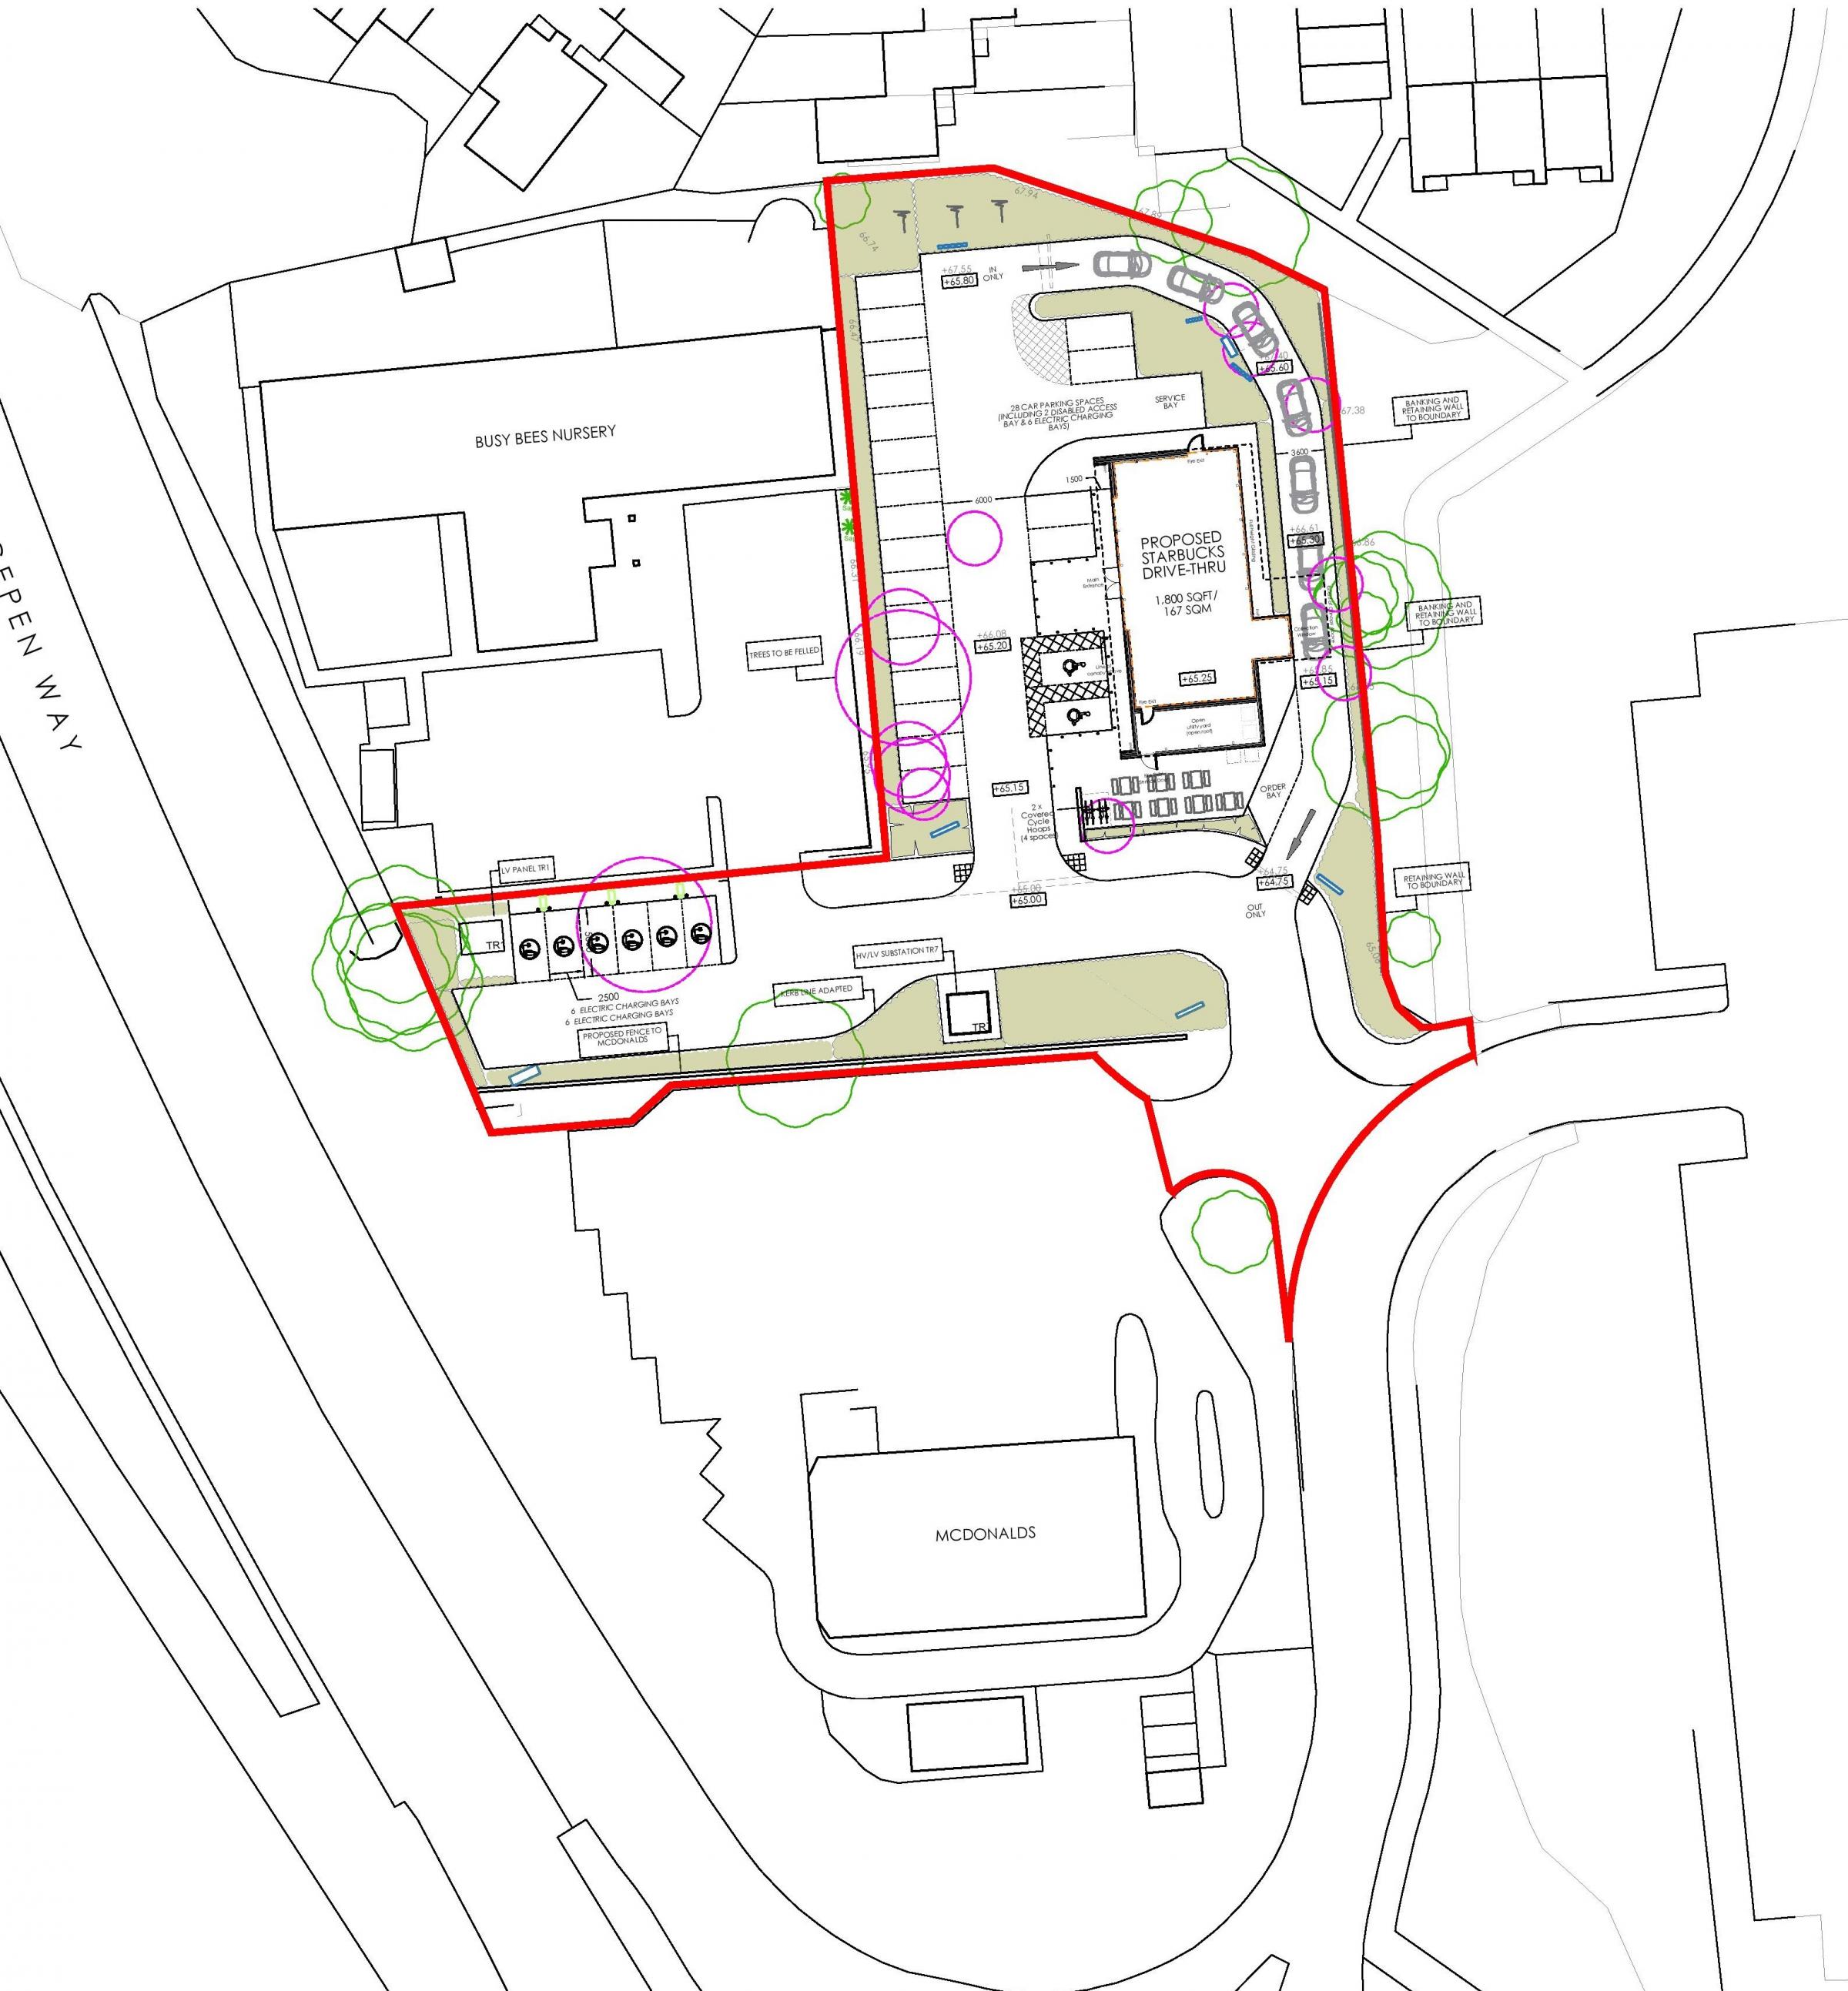 Proposed site plan for Bath Rd Starbucks drive-thru